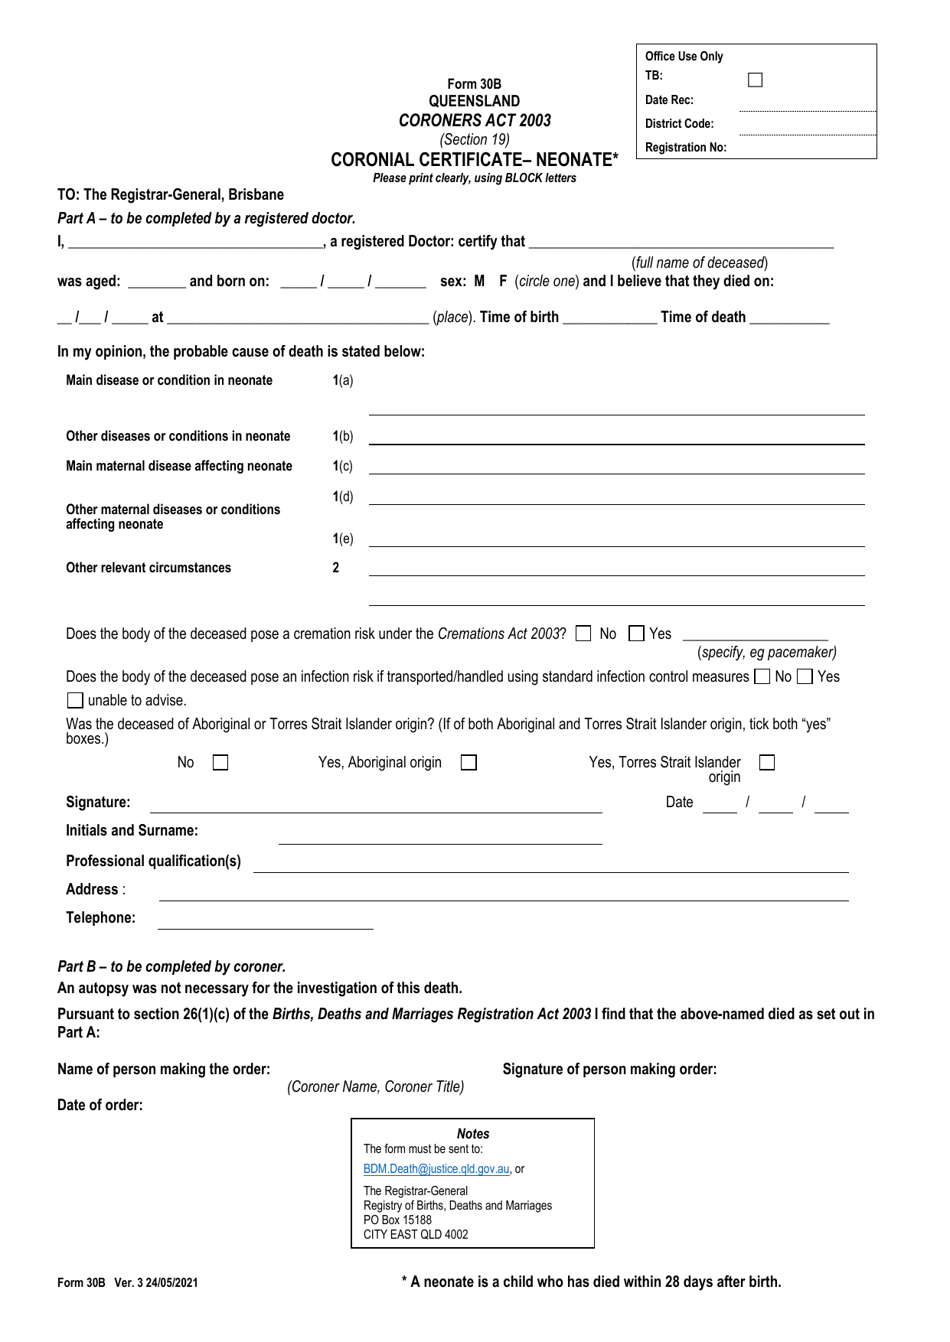 Form 30B Coronial Certificate - Neonate - Queensland, Australia, Page 1